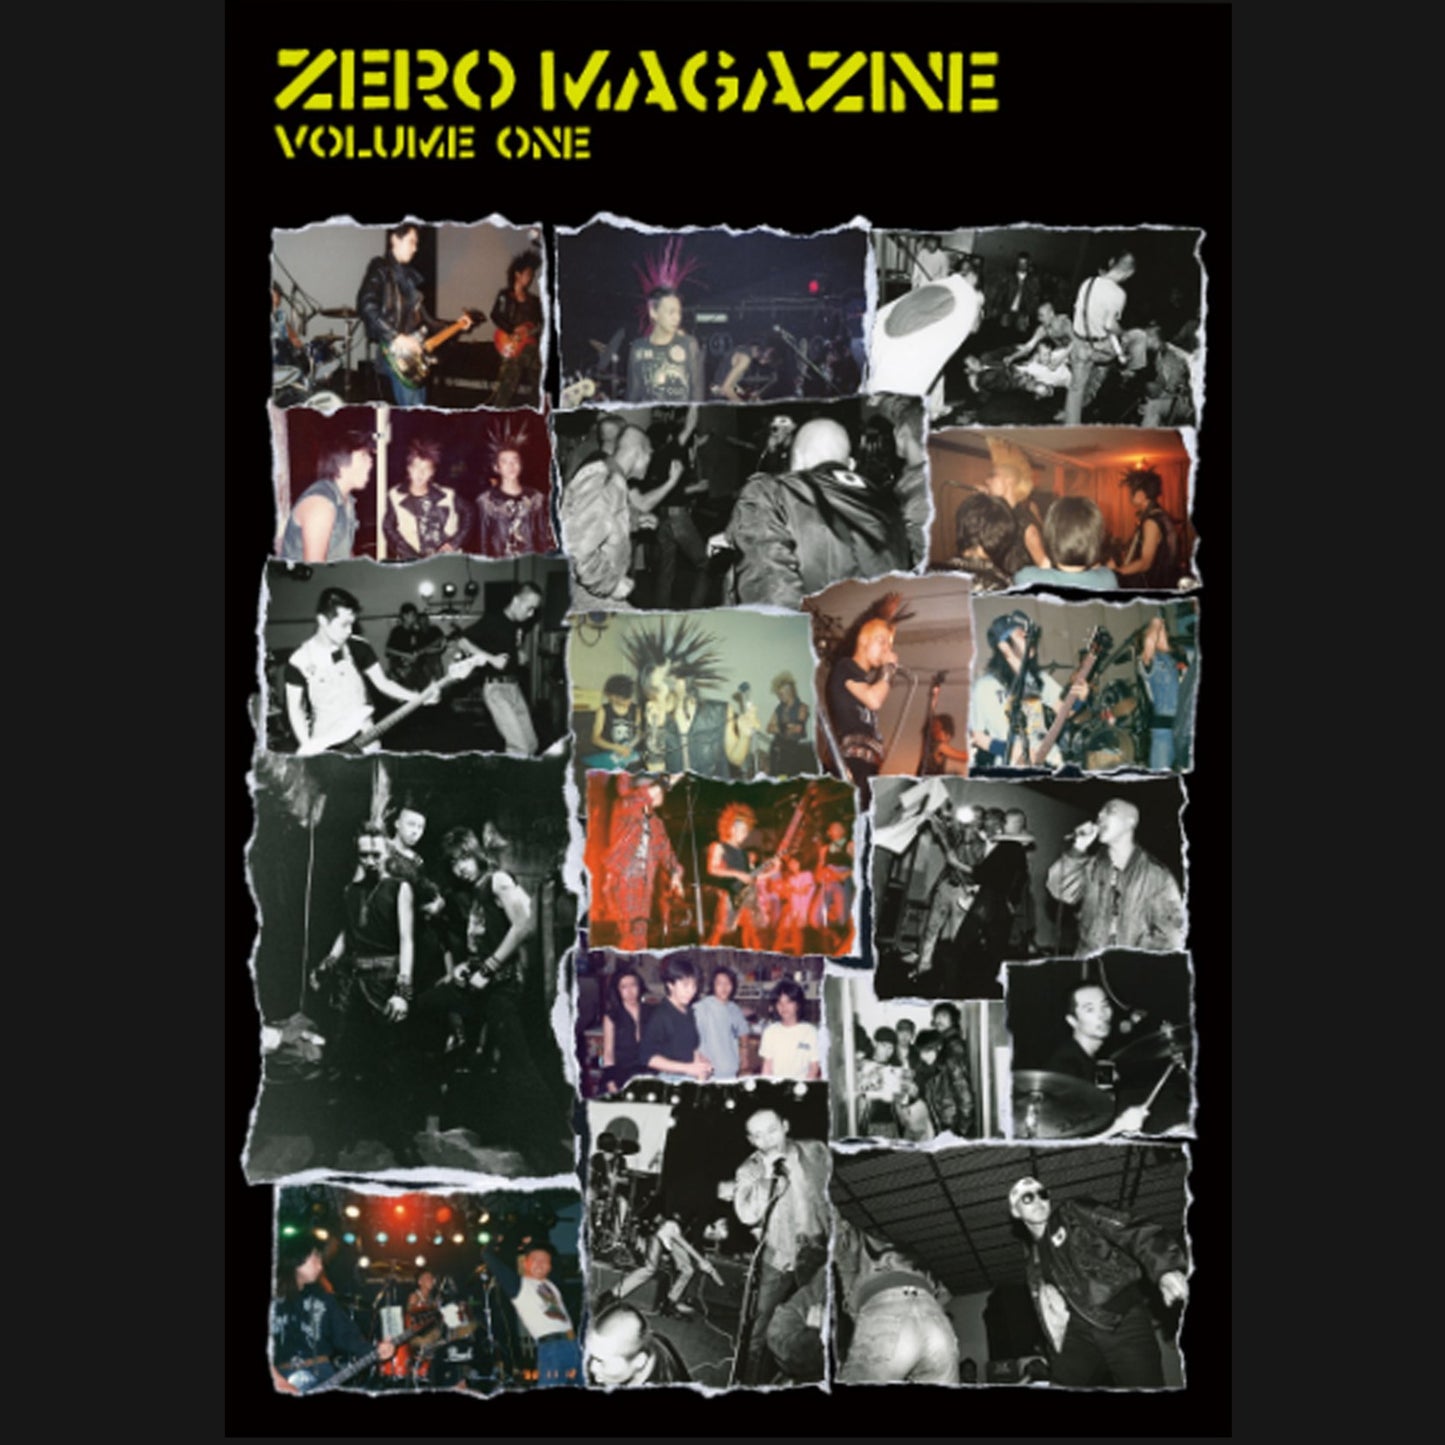 ZERO MAGAZINE - "VOLUME ONE" BOOK